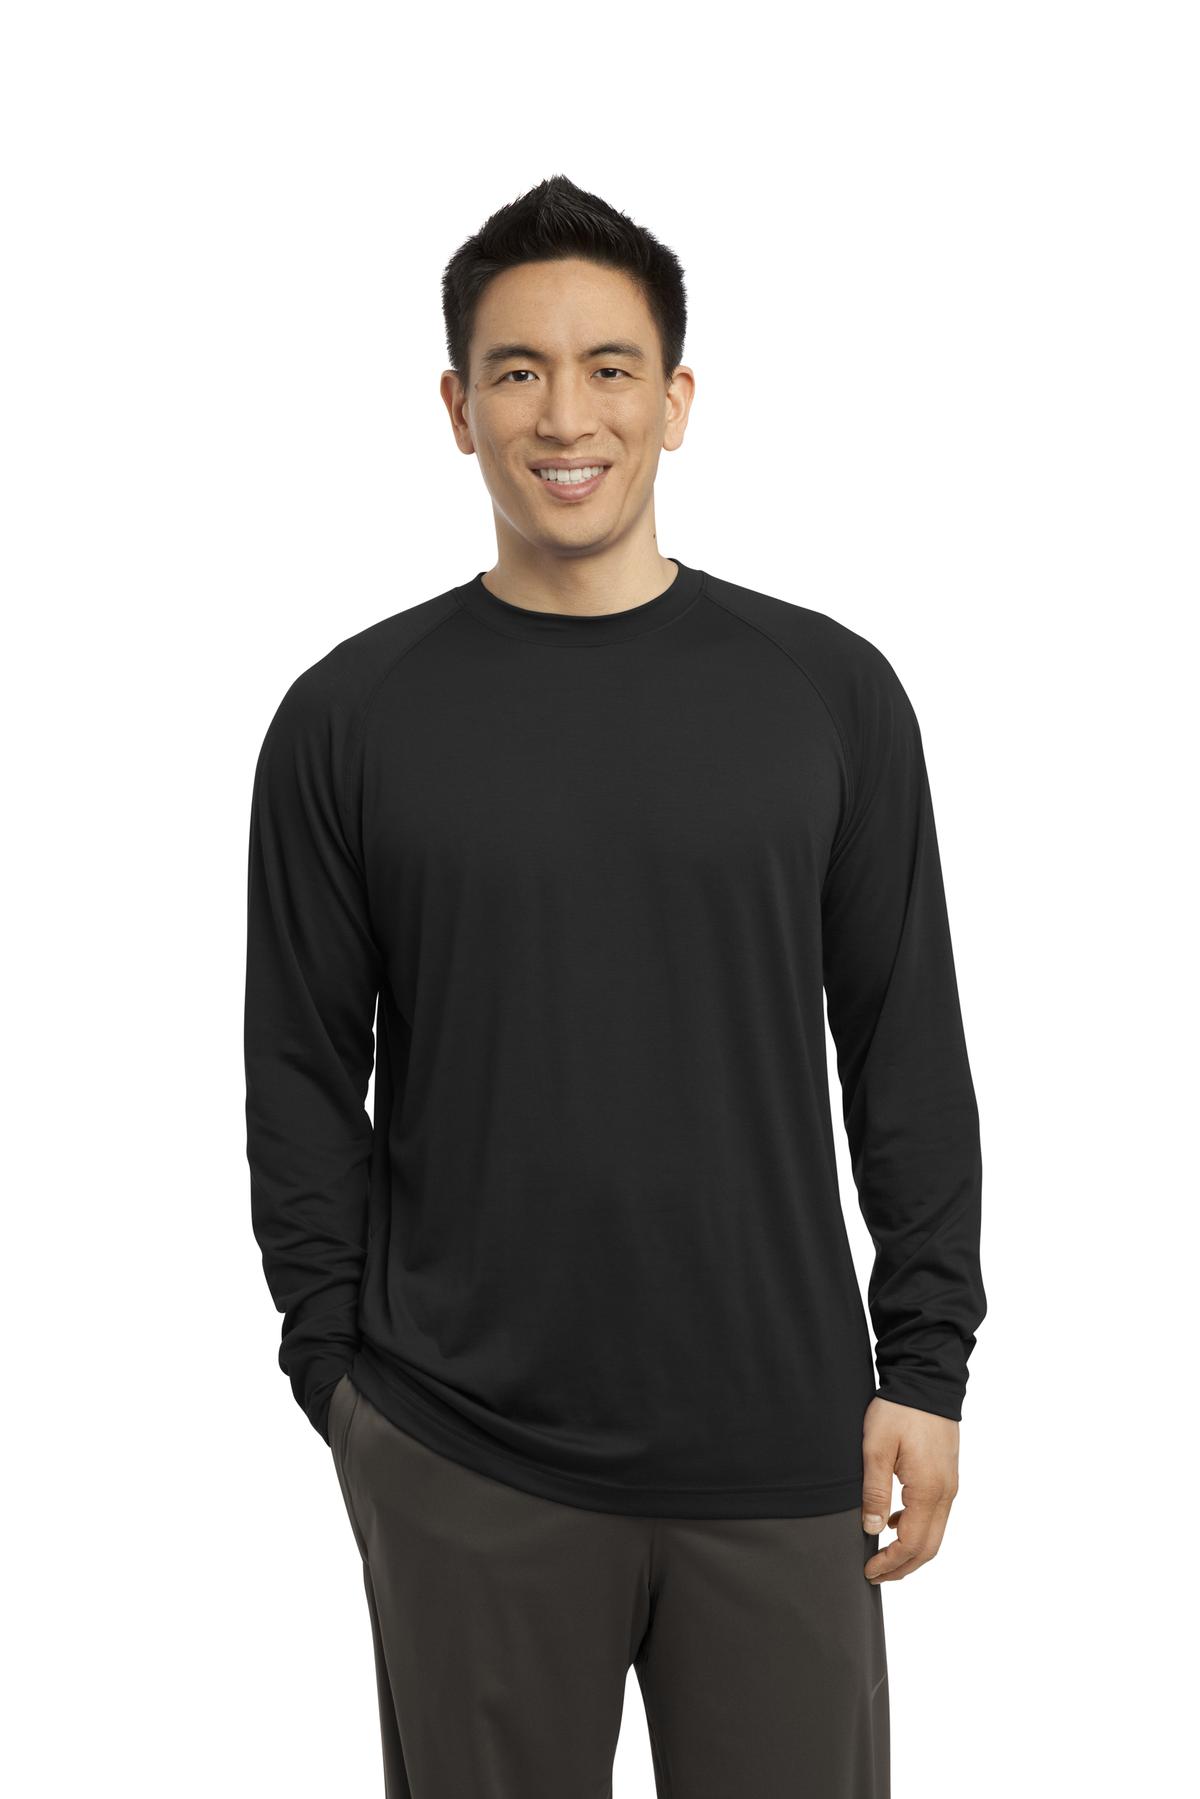 Sport-Tek Activewear T-Shirts for Hospitality ® Long Sleeve Ultimate Performance Crew.-Sport-Tek